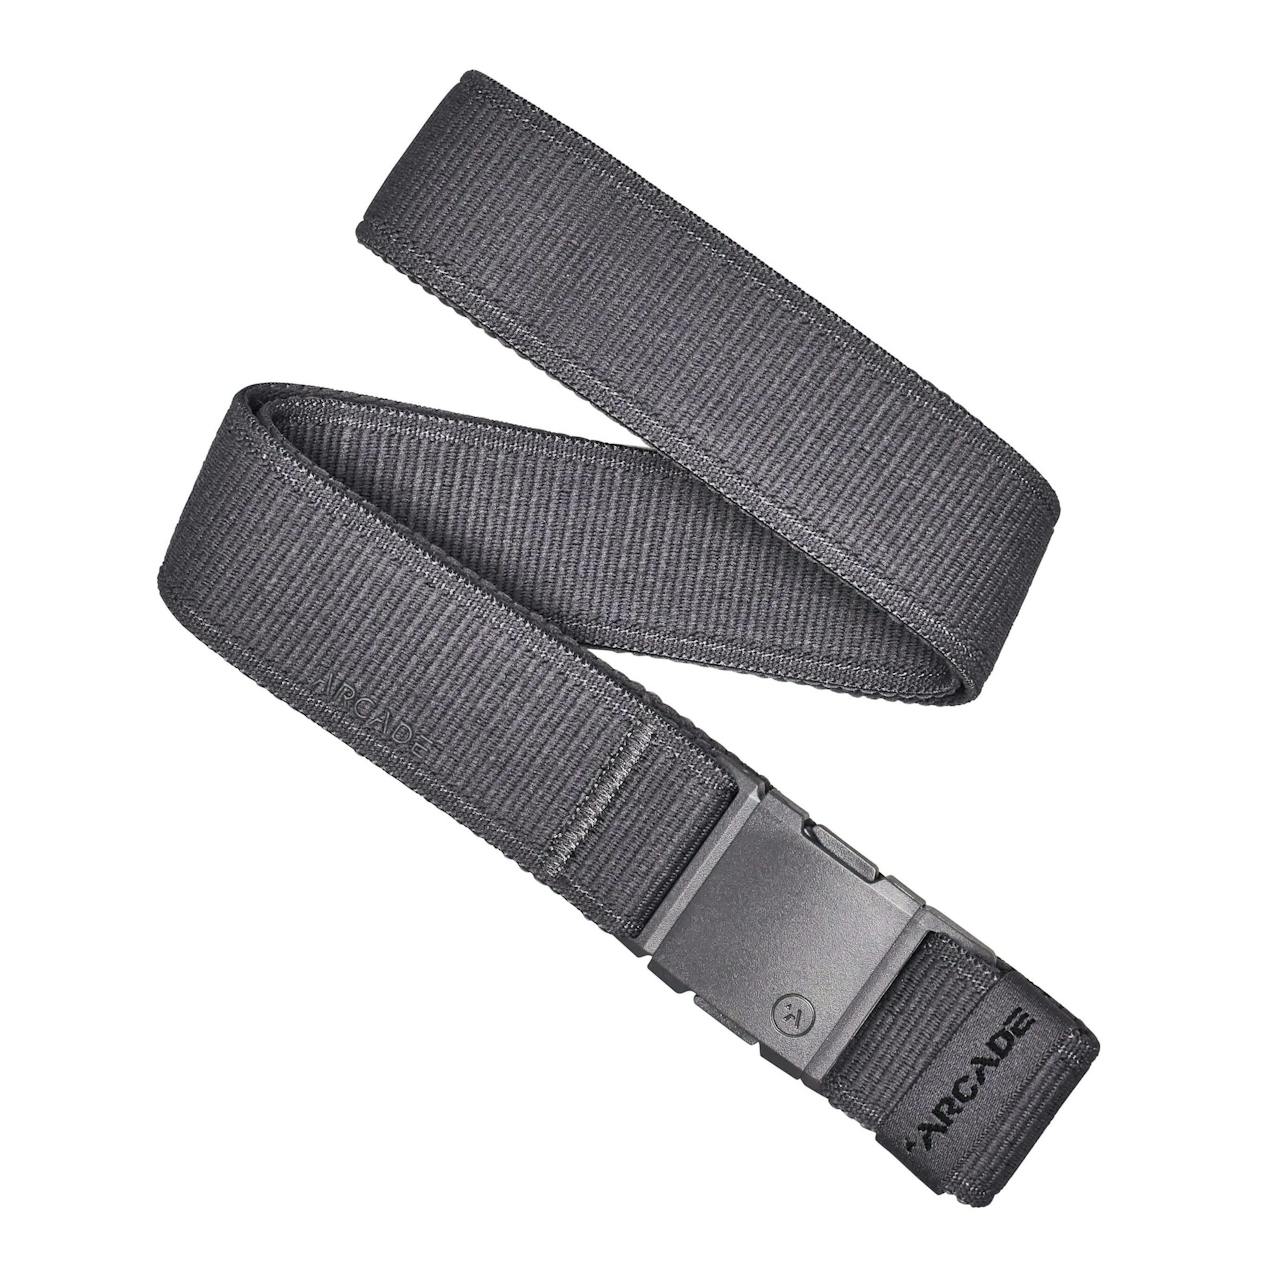 | Charcoal Stretch Belts - Belt | Arcade Huckberry Atlas Co. - Belt Performance